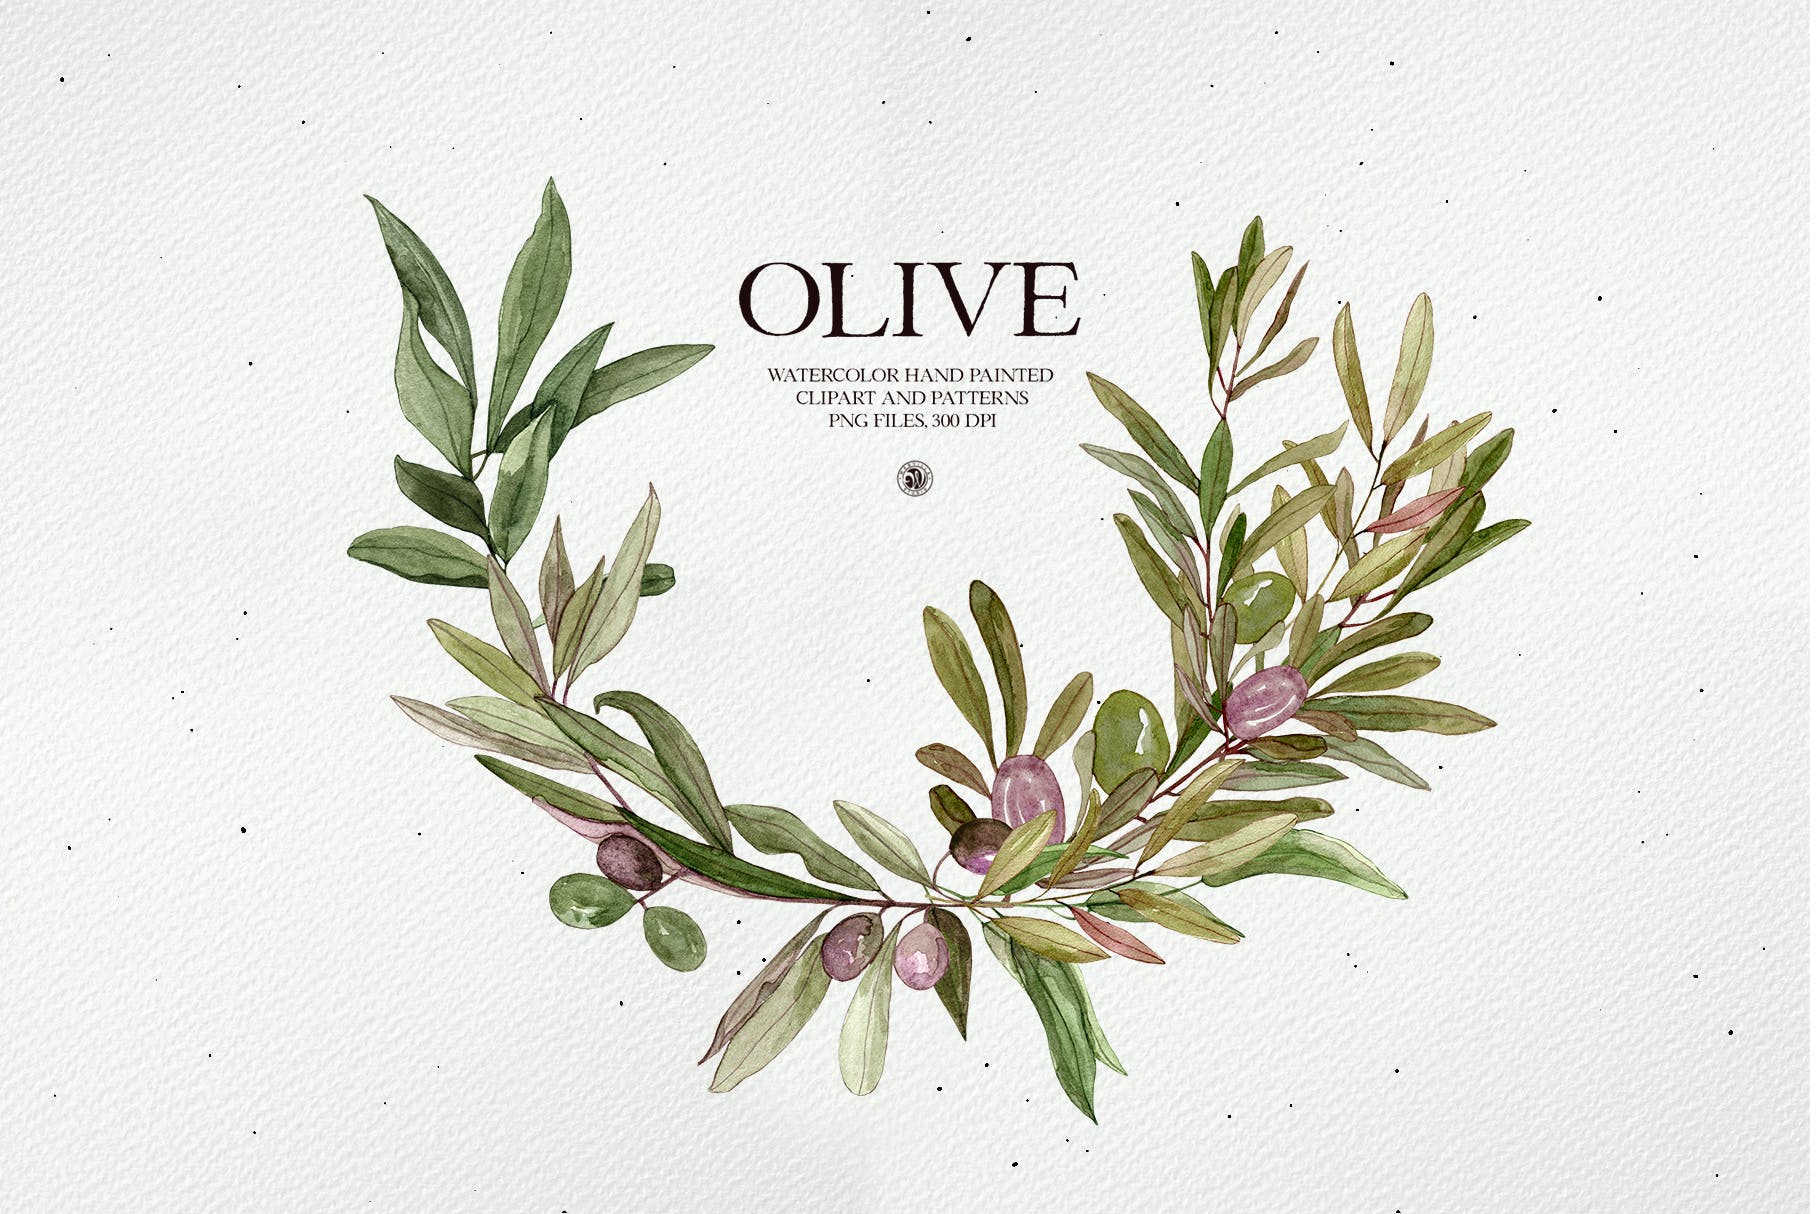 水彩橄榄框架和图案素材 Watercolor Olive – frames and patterns 图片素材 第4张